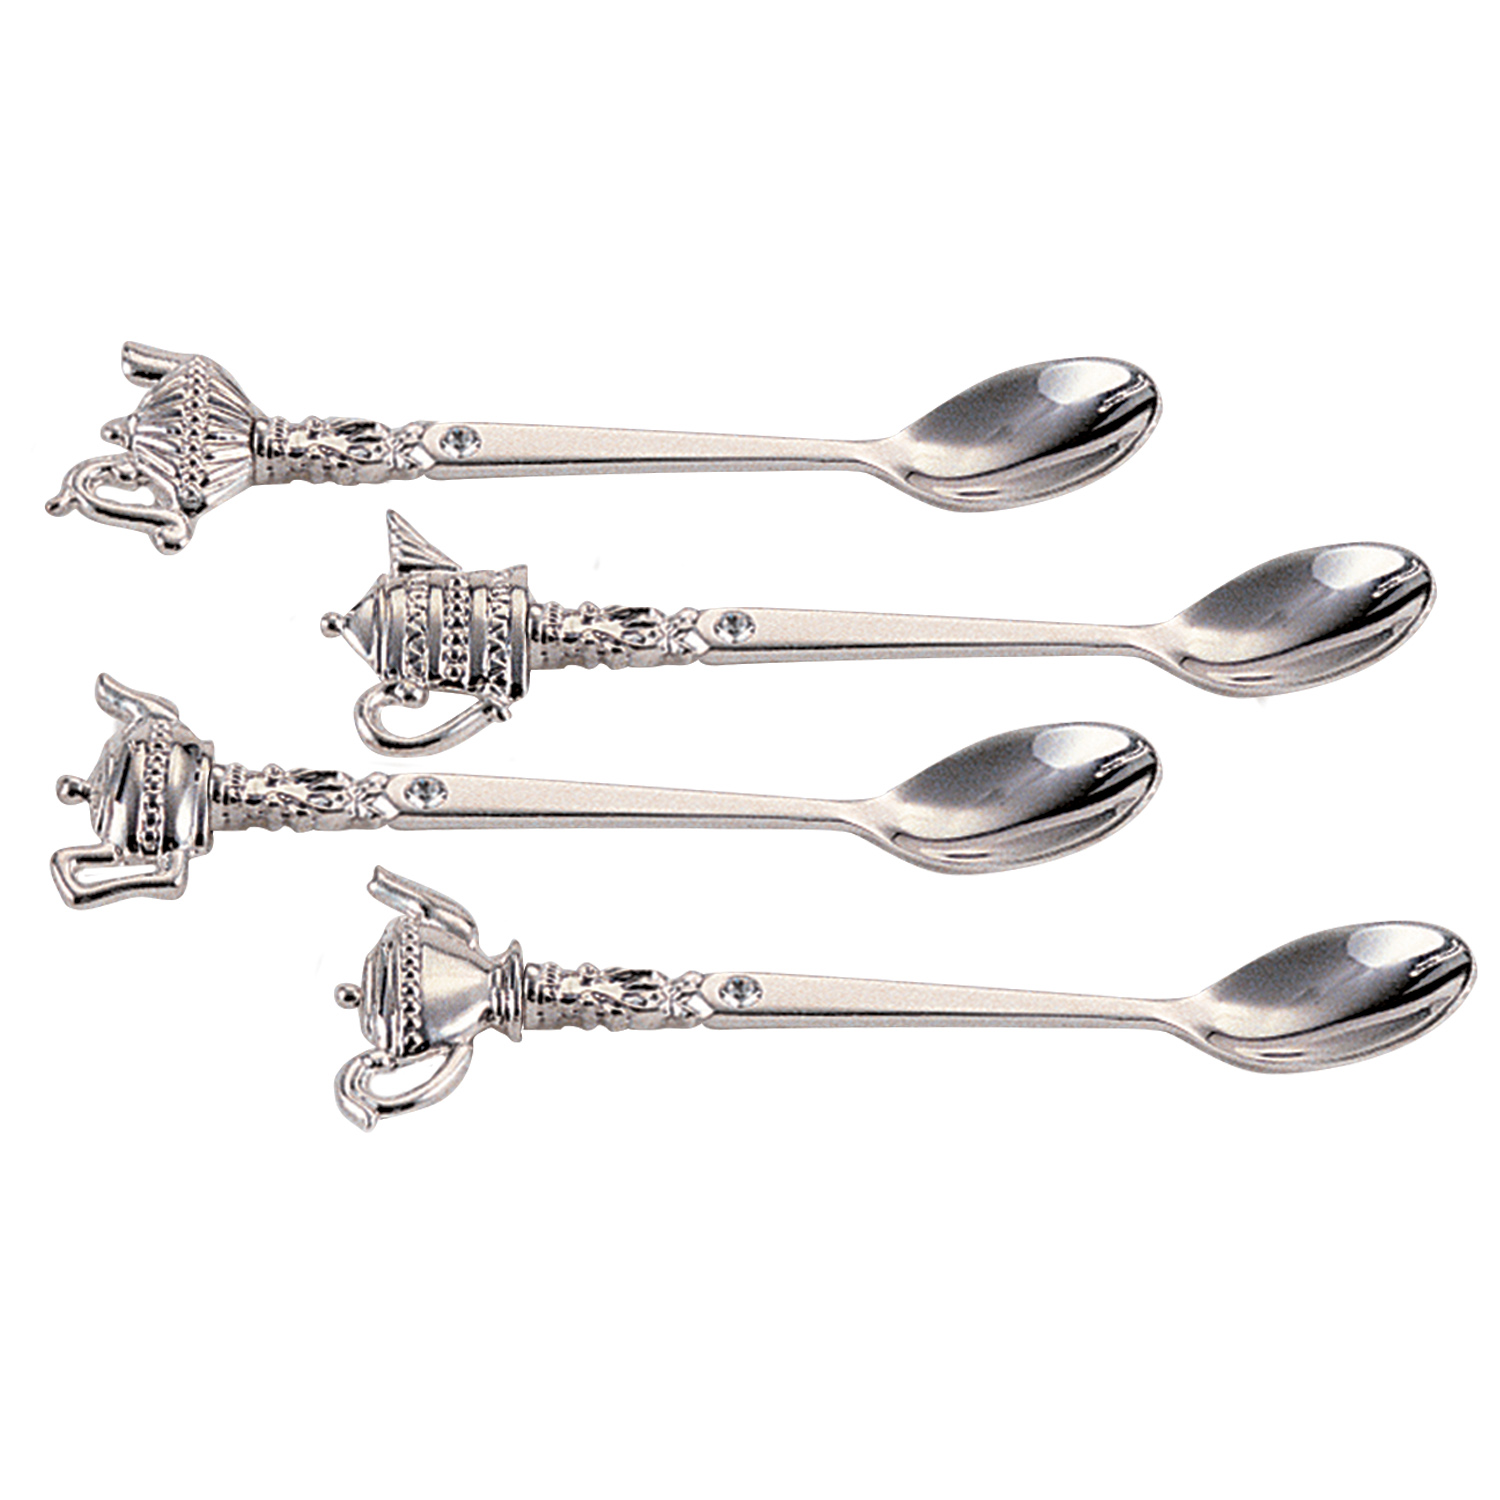 Sp teapot spoons w/crystal, set of 4 - Item # 6559